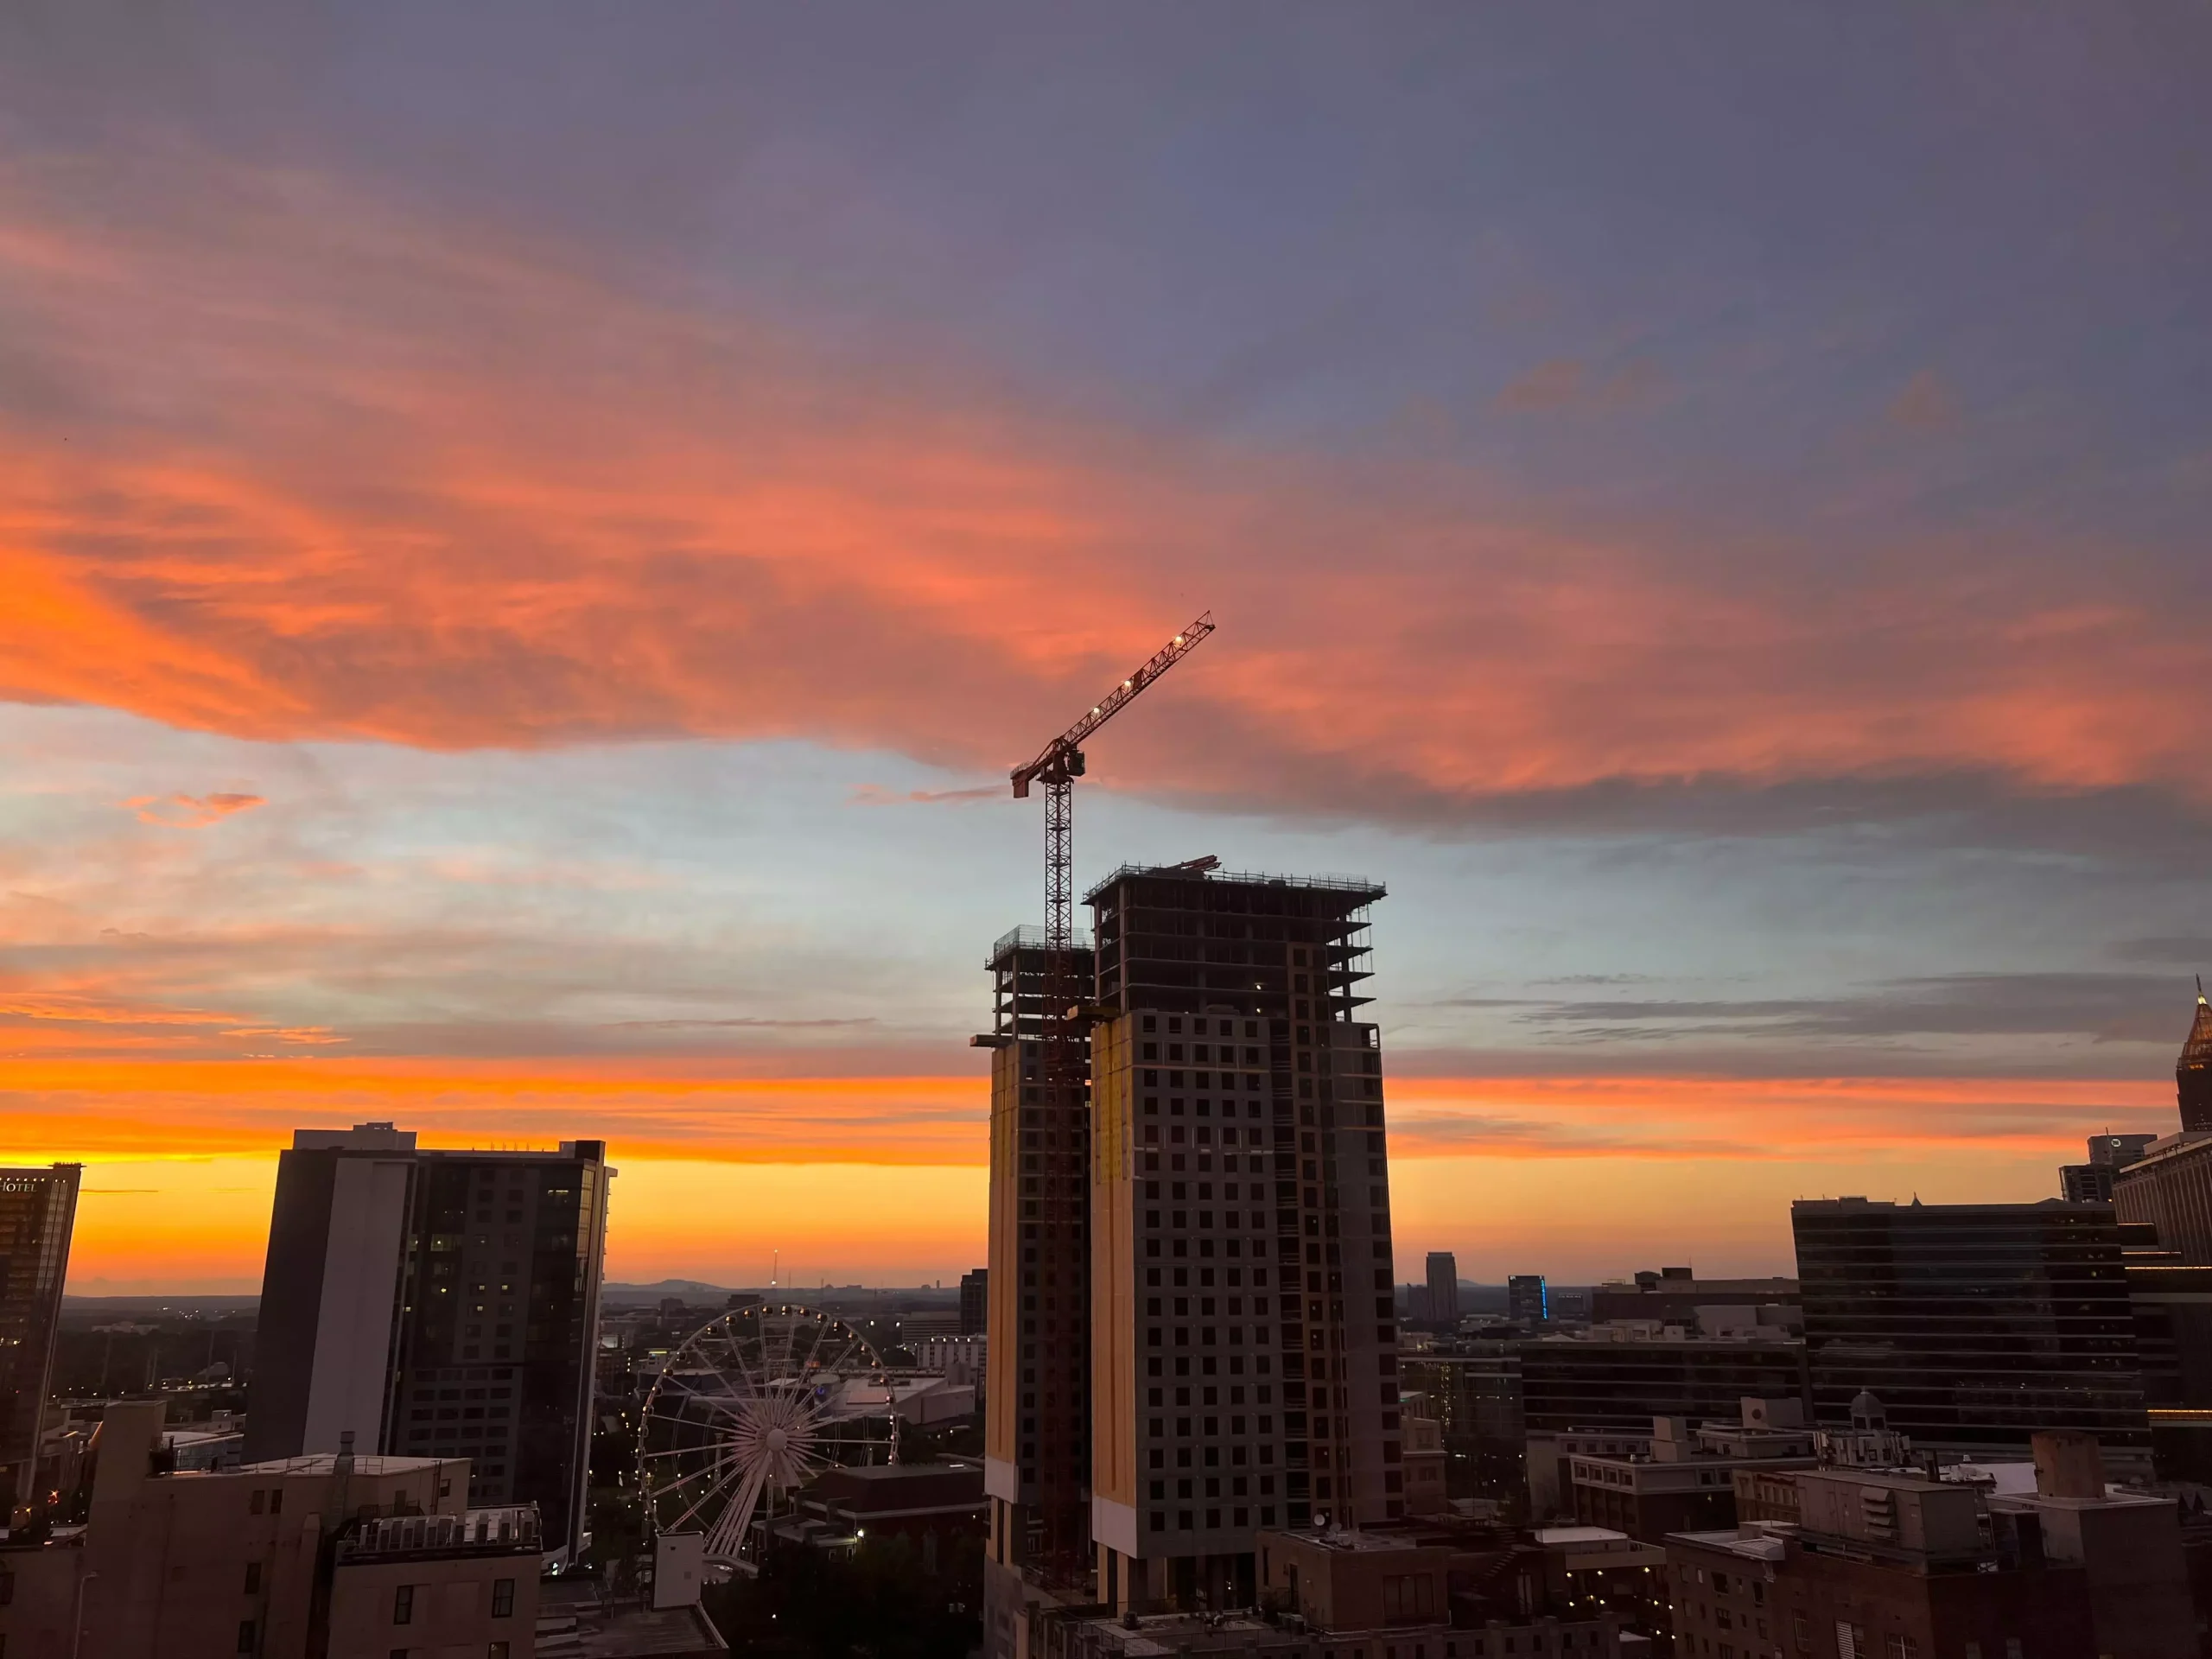 A sunset view of Atlanta's city skyline.